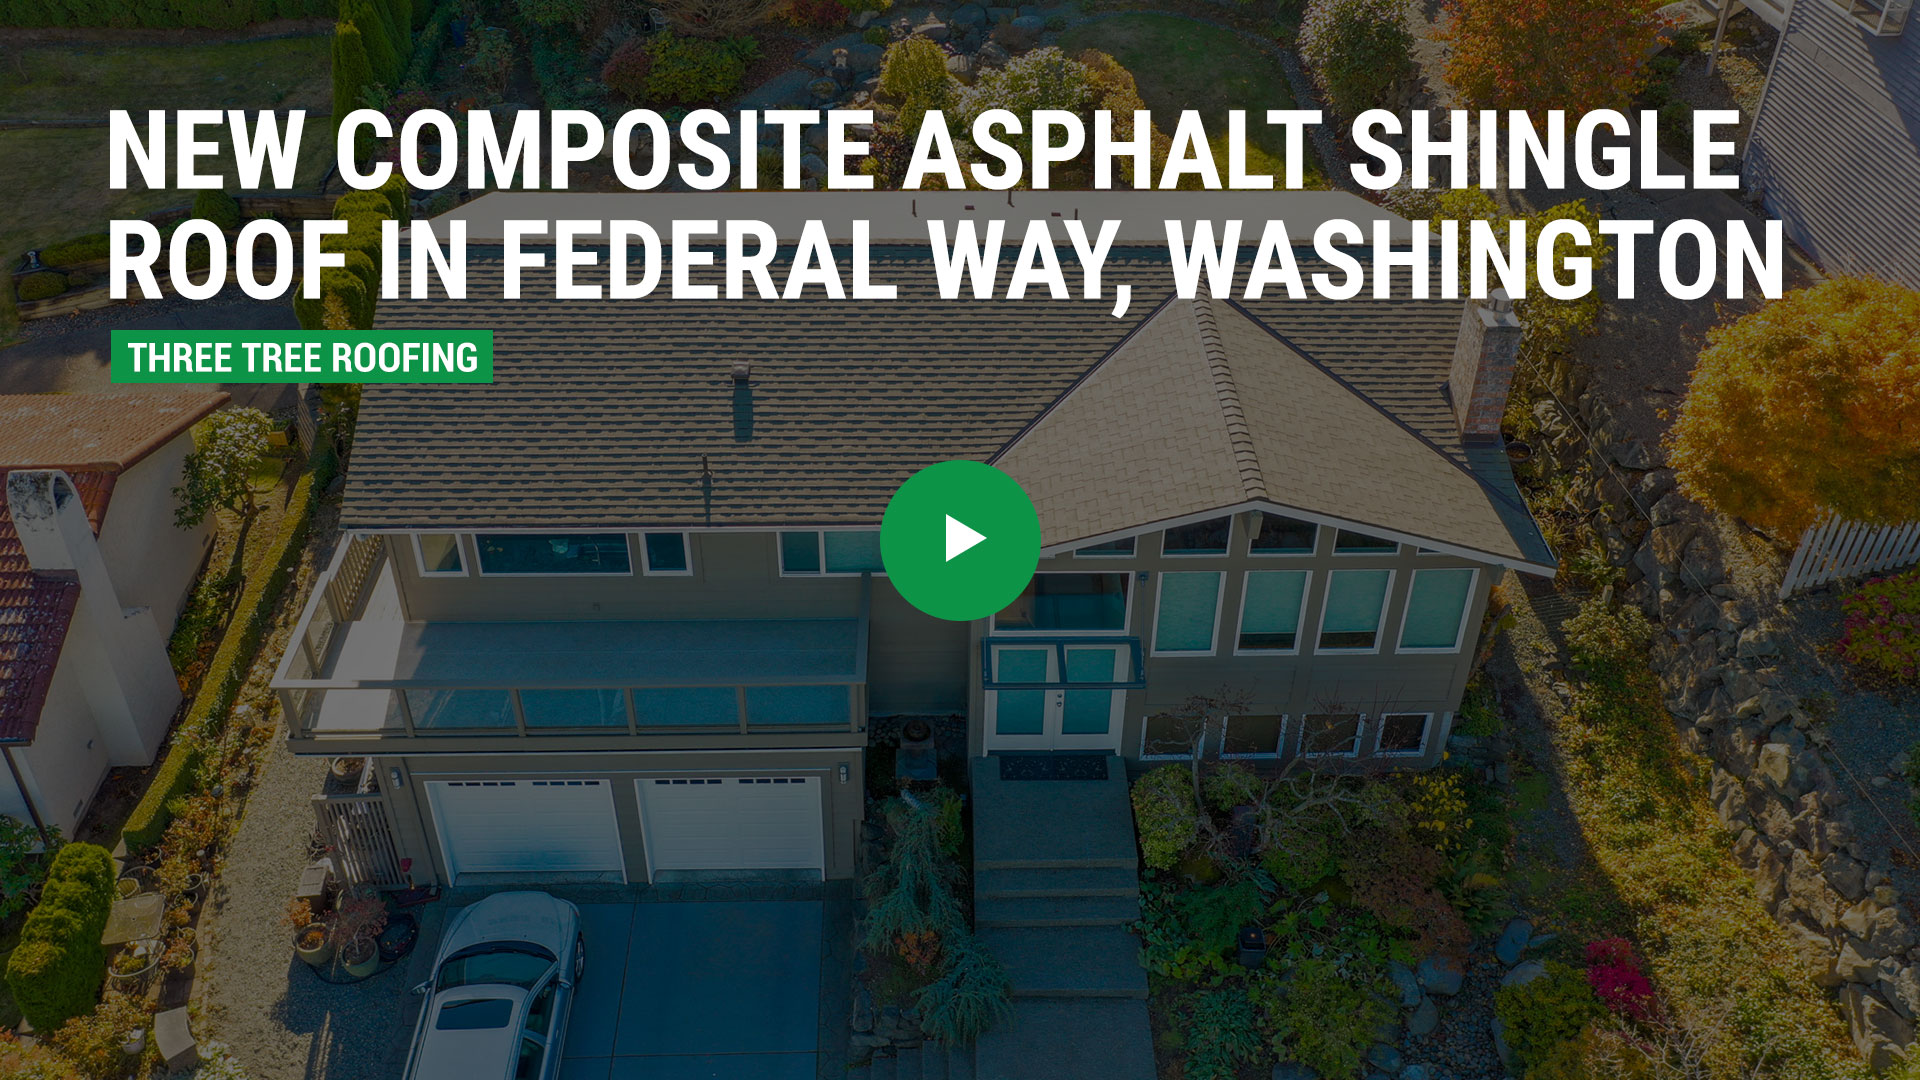 New Composite Asphalt Shingle Roof in Federal Way, Washington